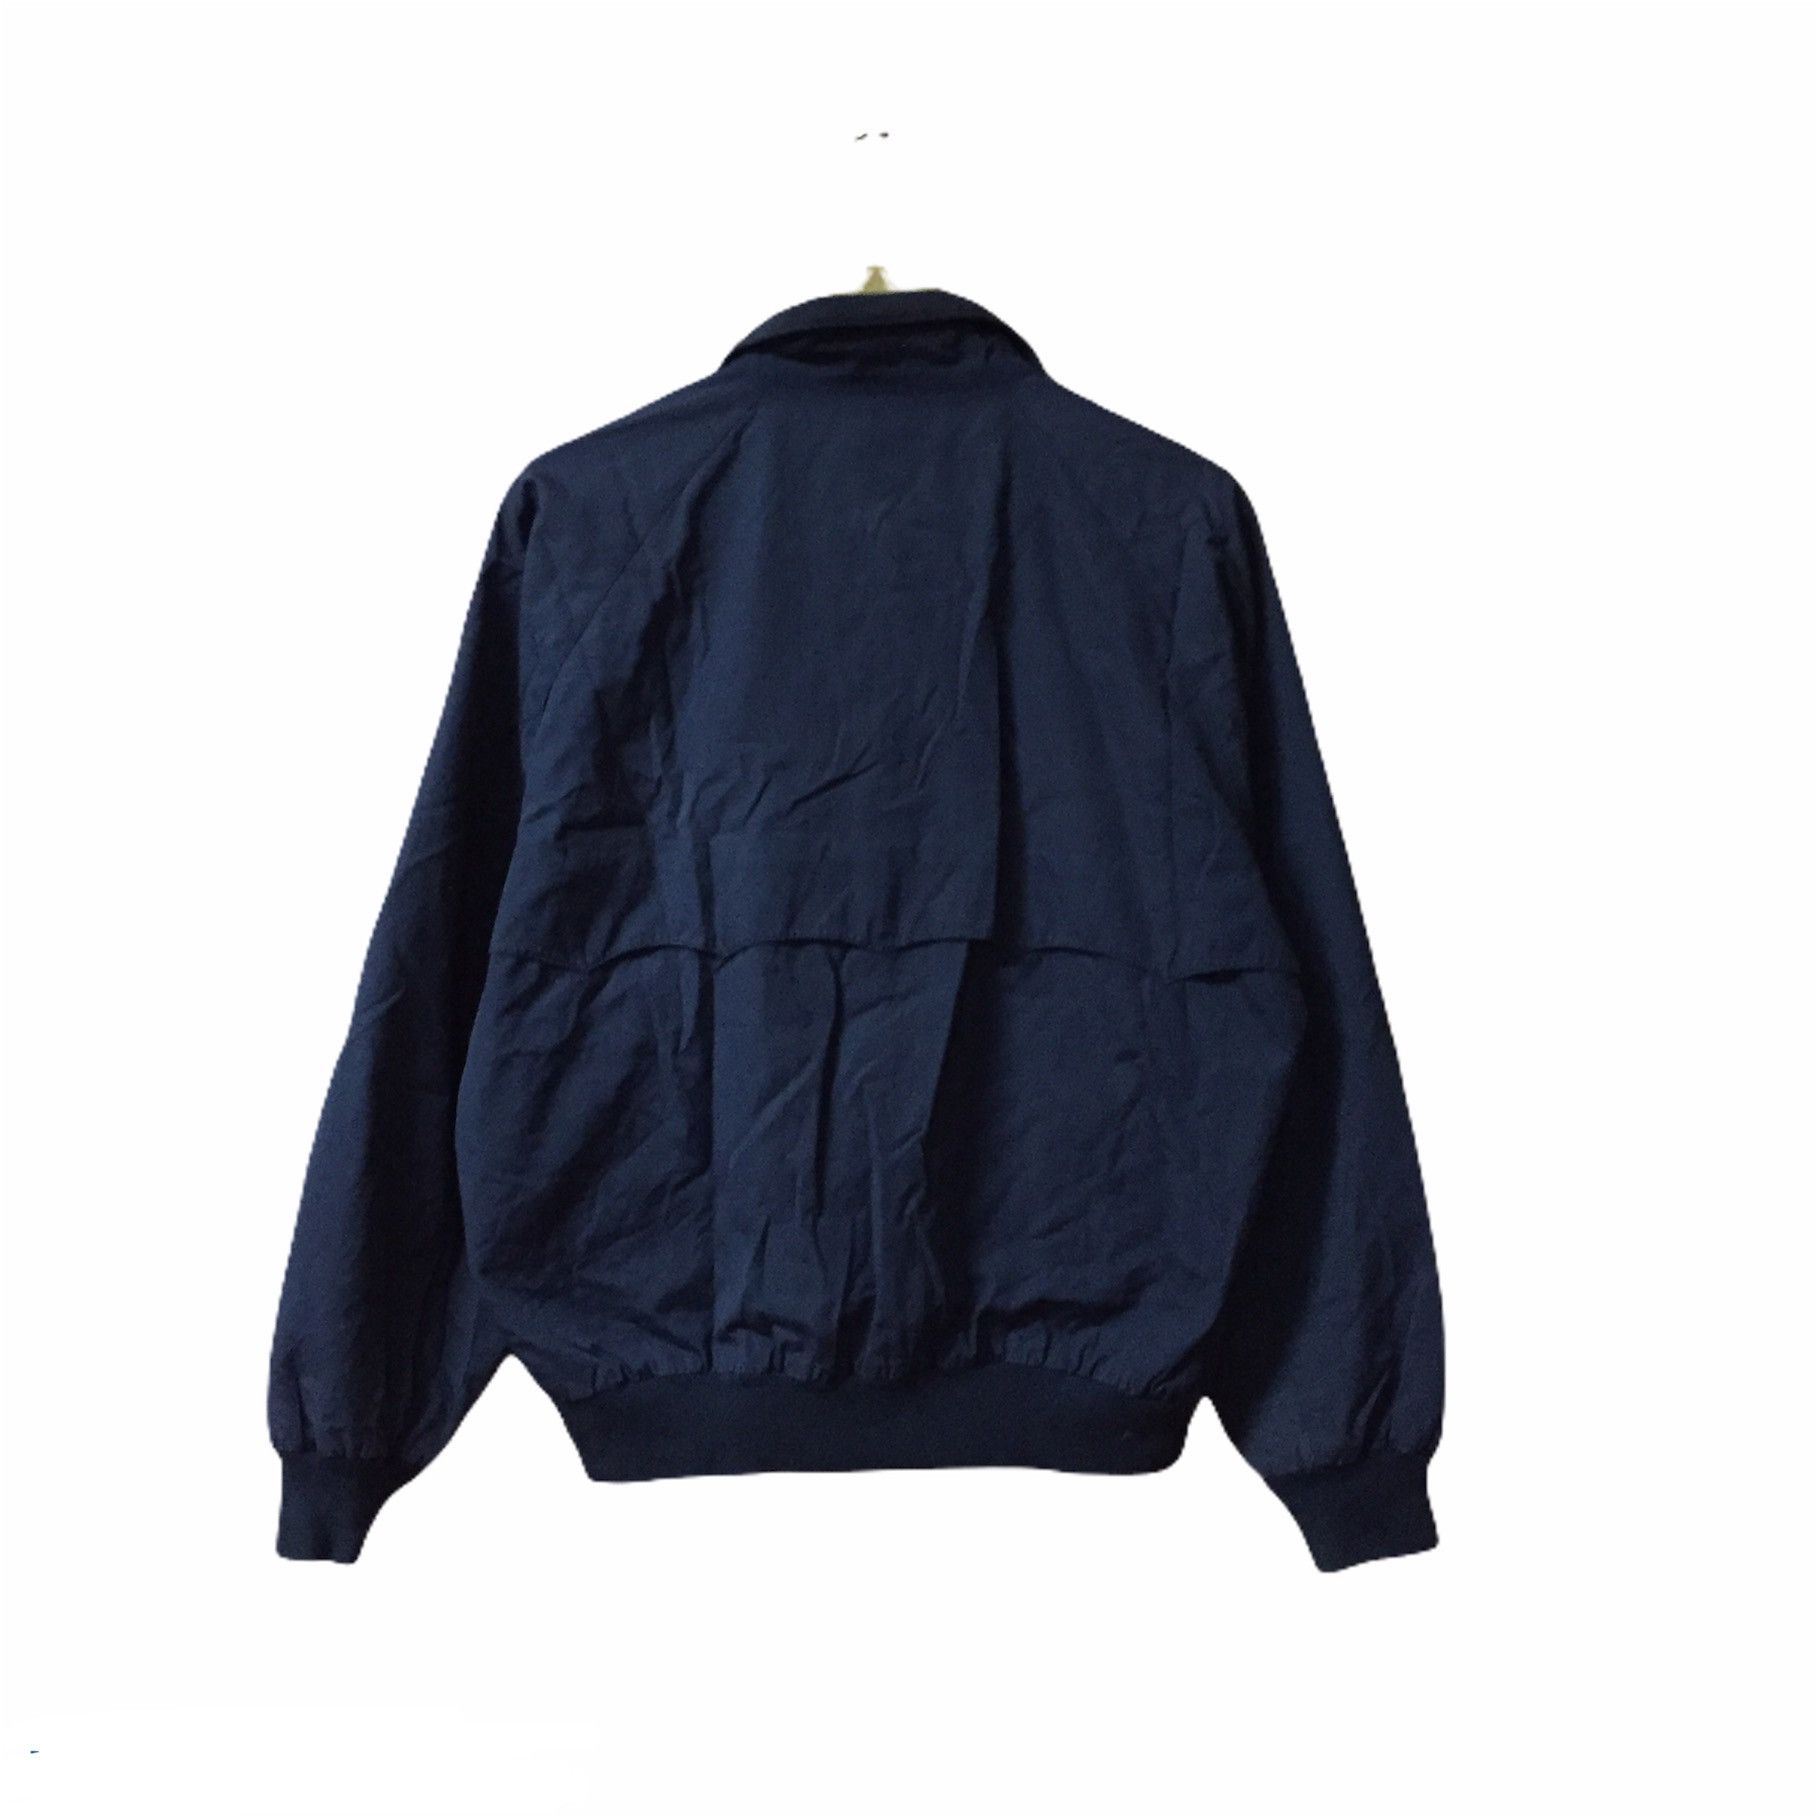 Japanese Brand Vintage 90’s Mcgregor Light Jacket Double Pocket Zipper Size US M / EU 48-50 / 2 - 2 Preview